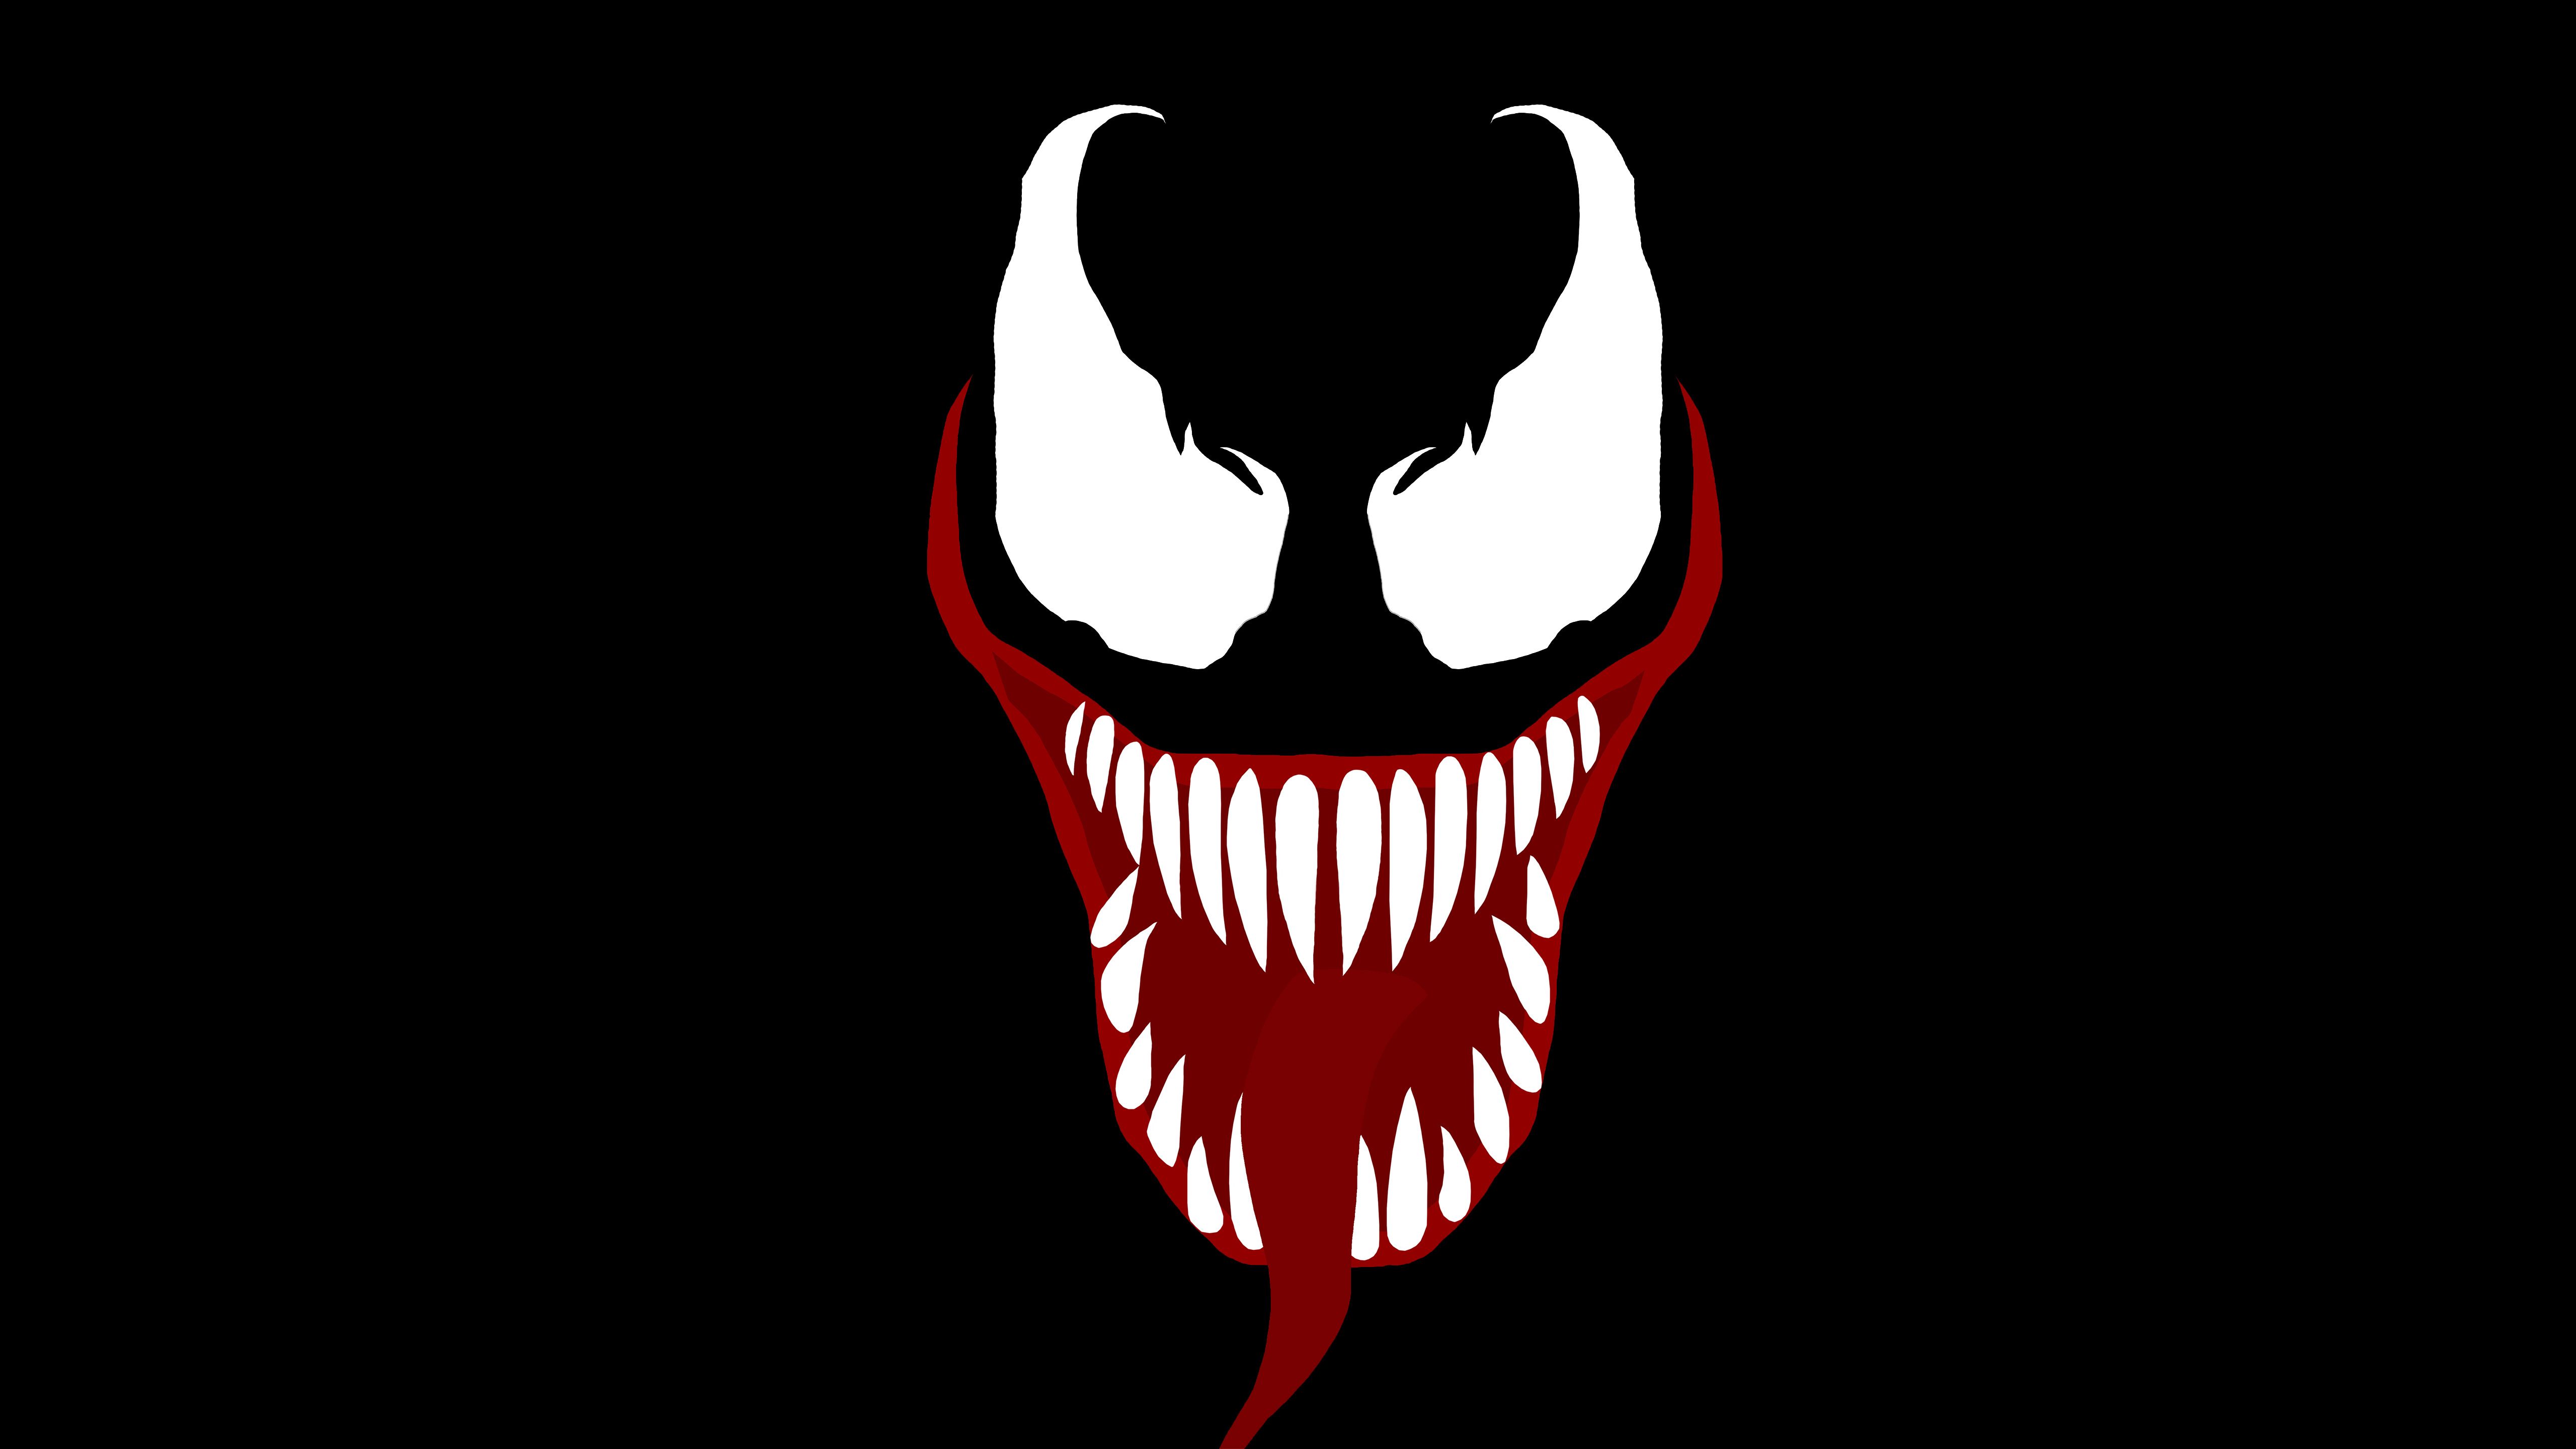 Venom Face Wallpaper Free Venom .wallpaperaccess.com